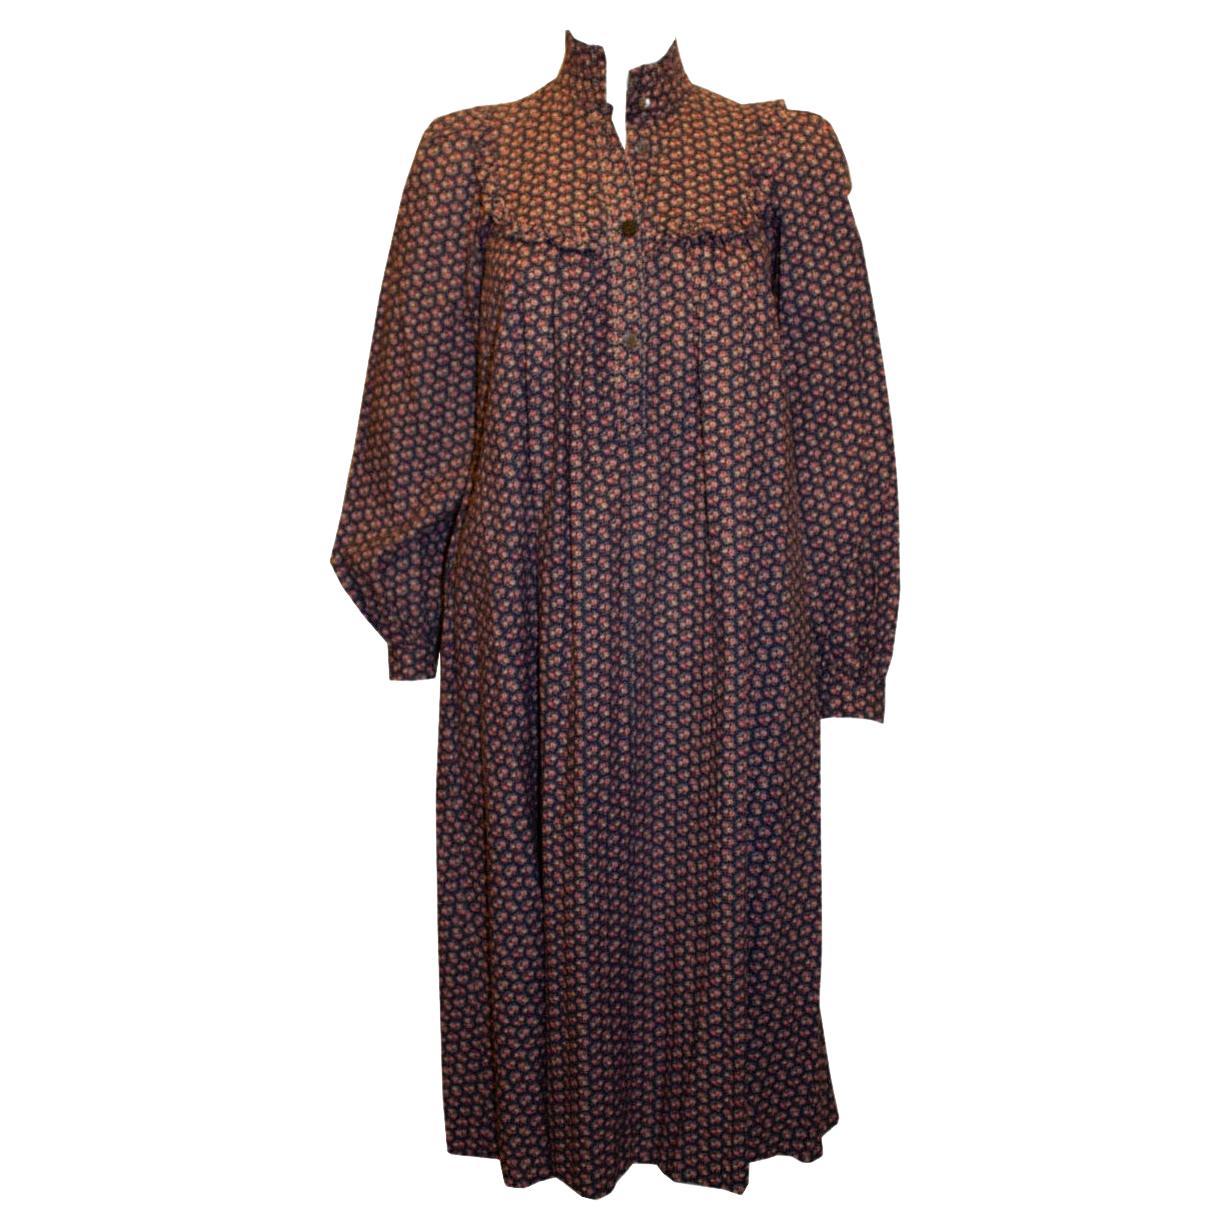 Laura Ashley - Robe à smocks en coton à fleurs, ancienne robe vintage en vente